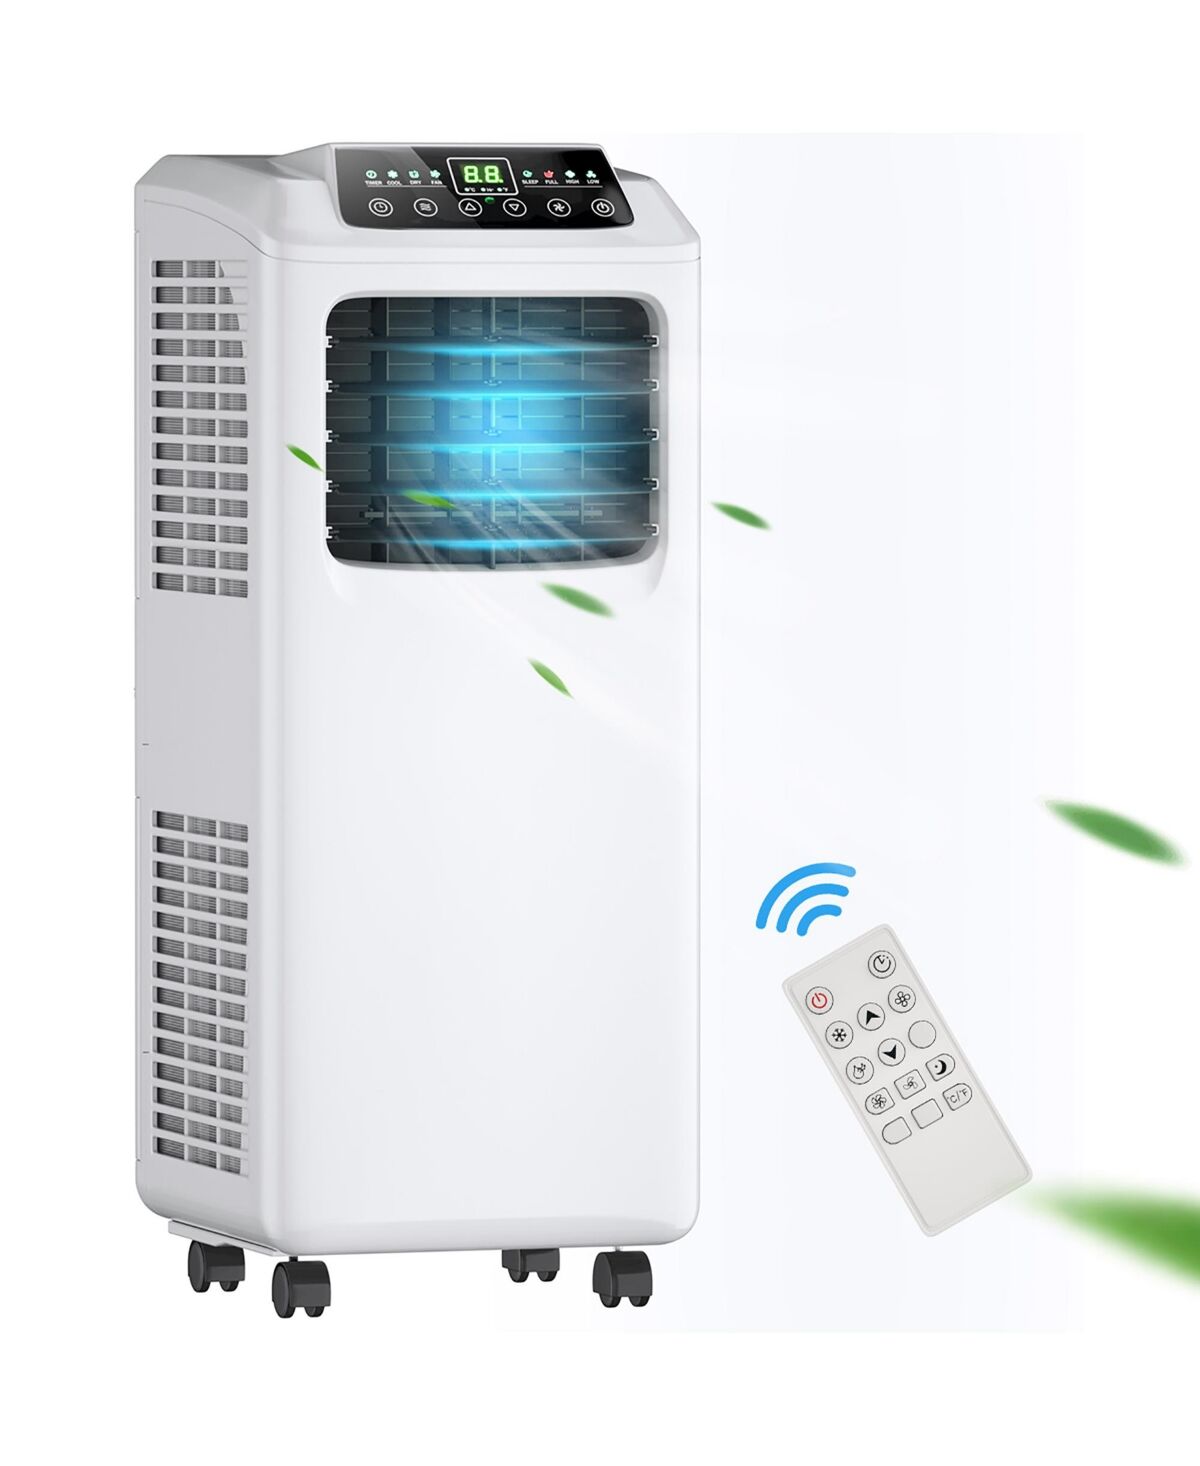 Costway 9,000 Btu Portable Air Conditioner & Dehumidifier Function Remote w/ Window Kit - White